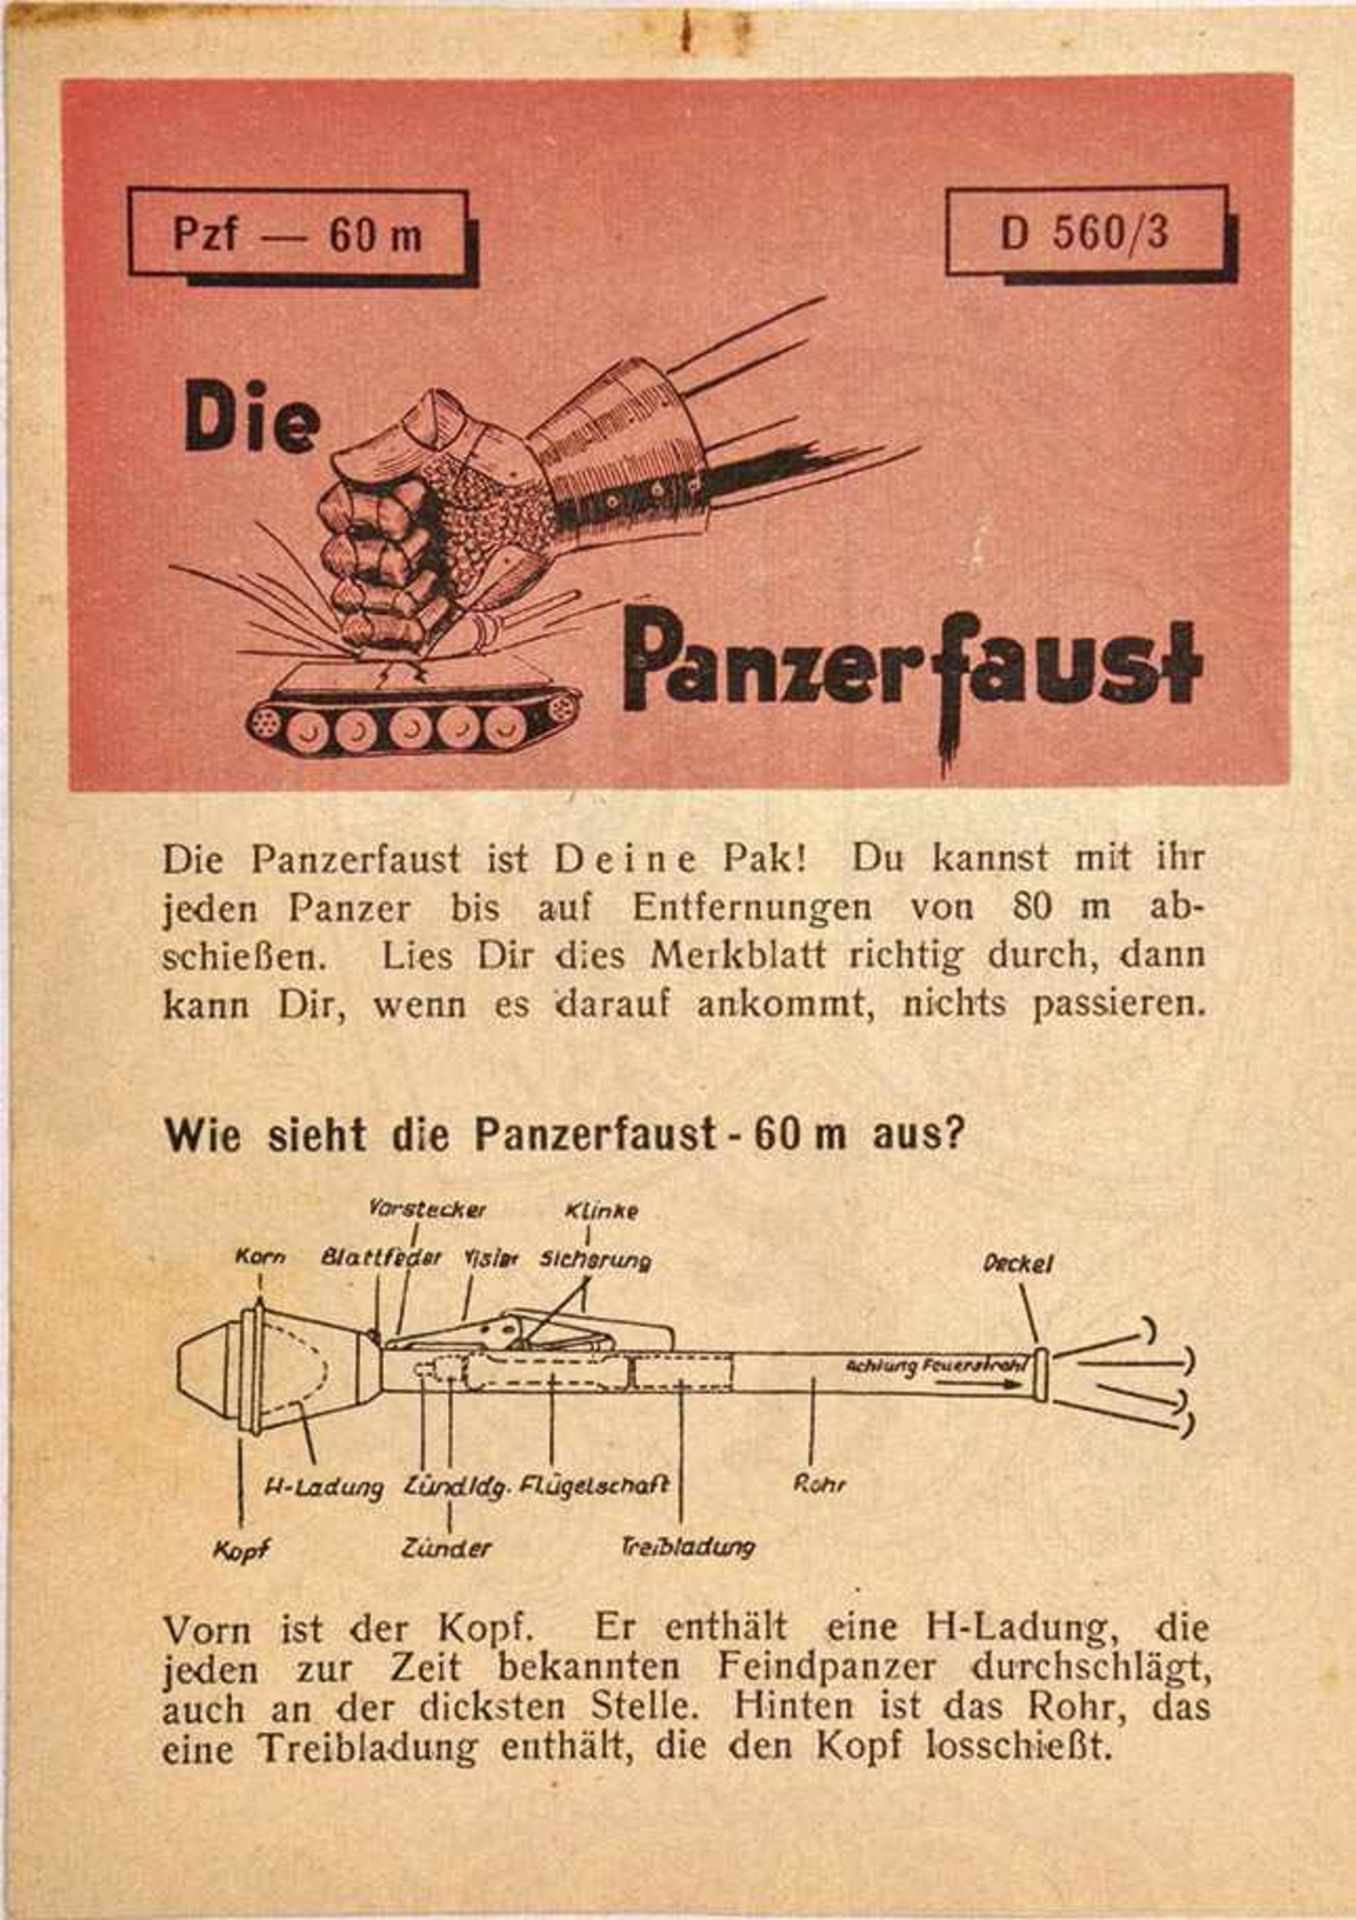 DIE PANZERFAUST, (Pzf-60 m - D 560/3), 10/1944, A 6 Faltblatt (4 S.), m. Abb.